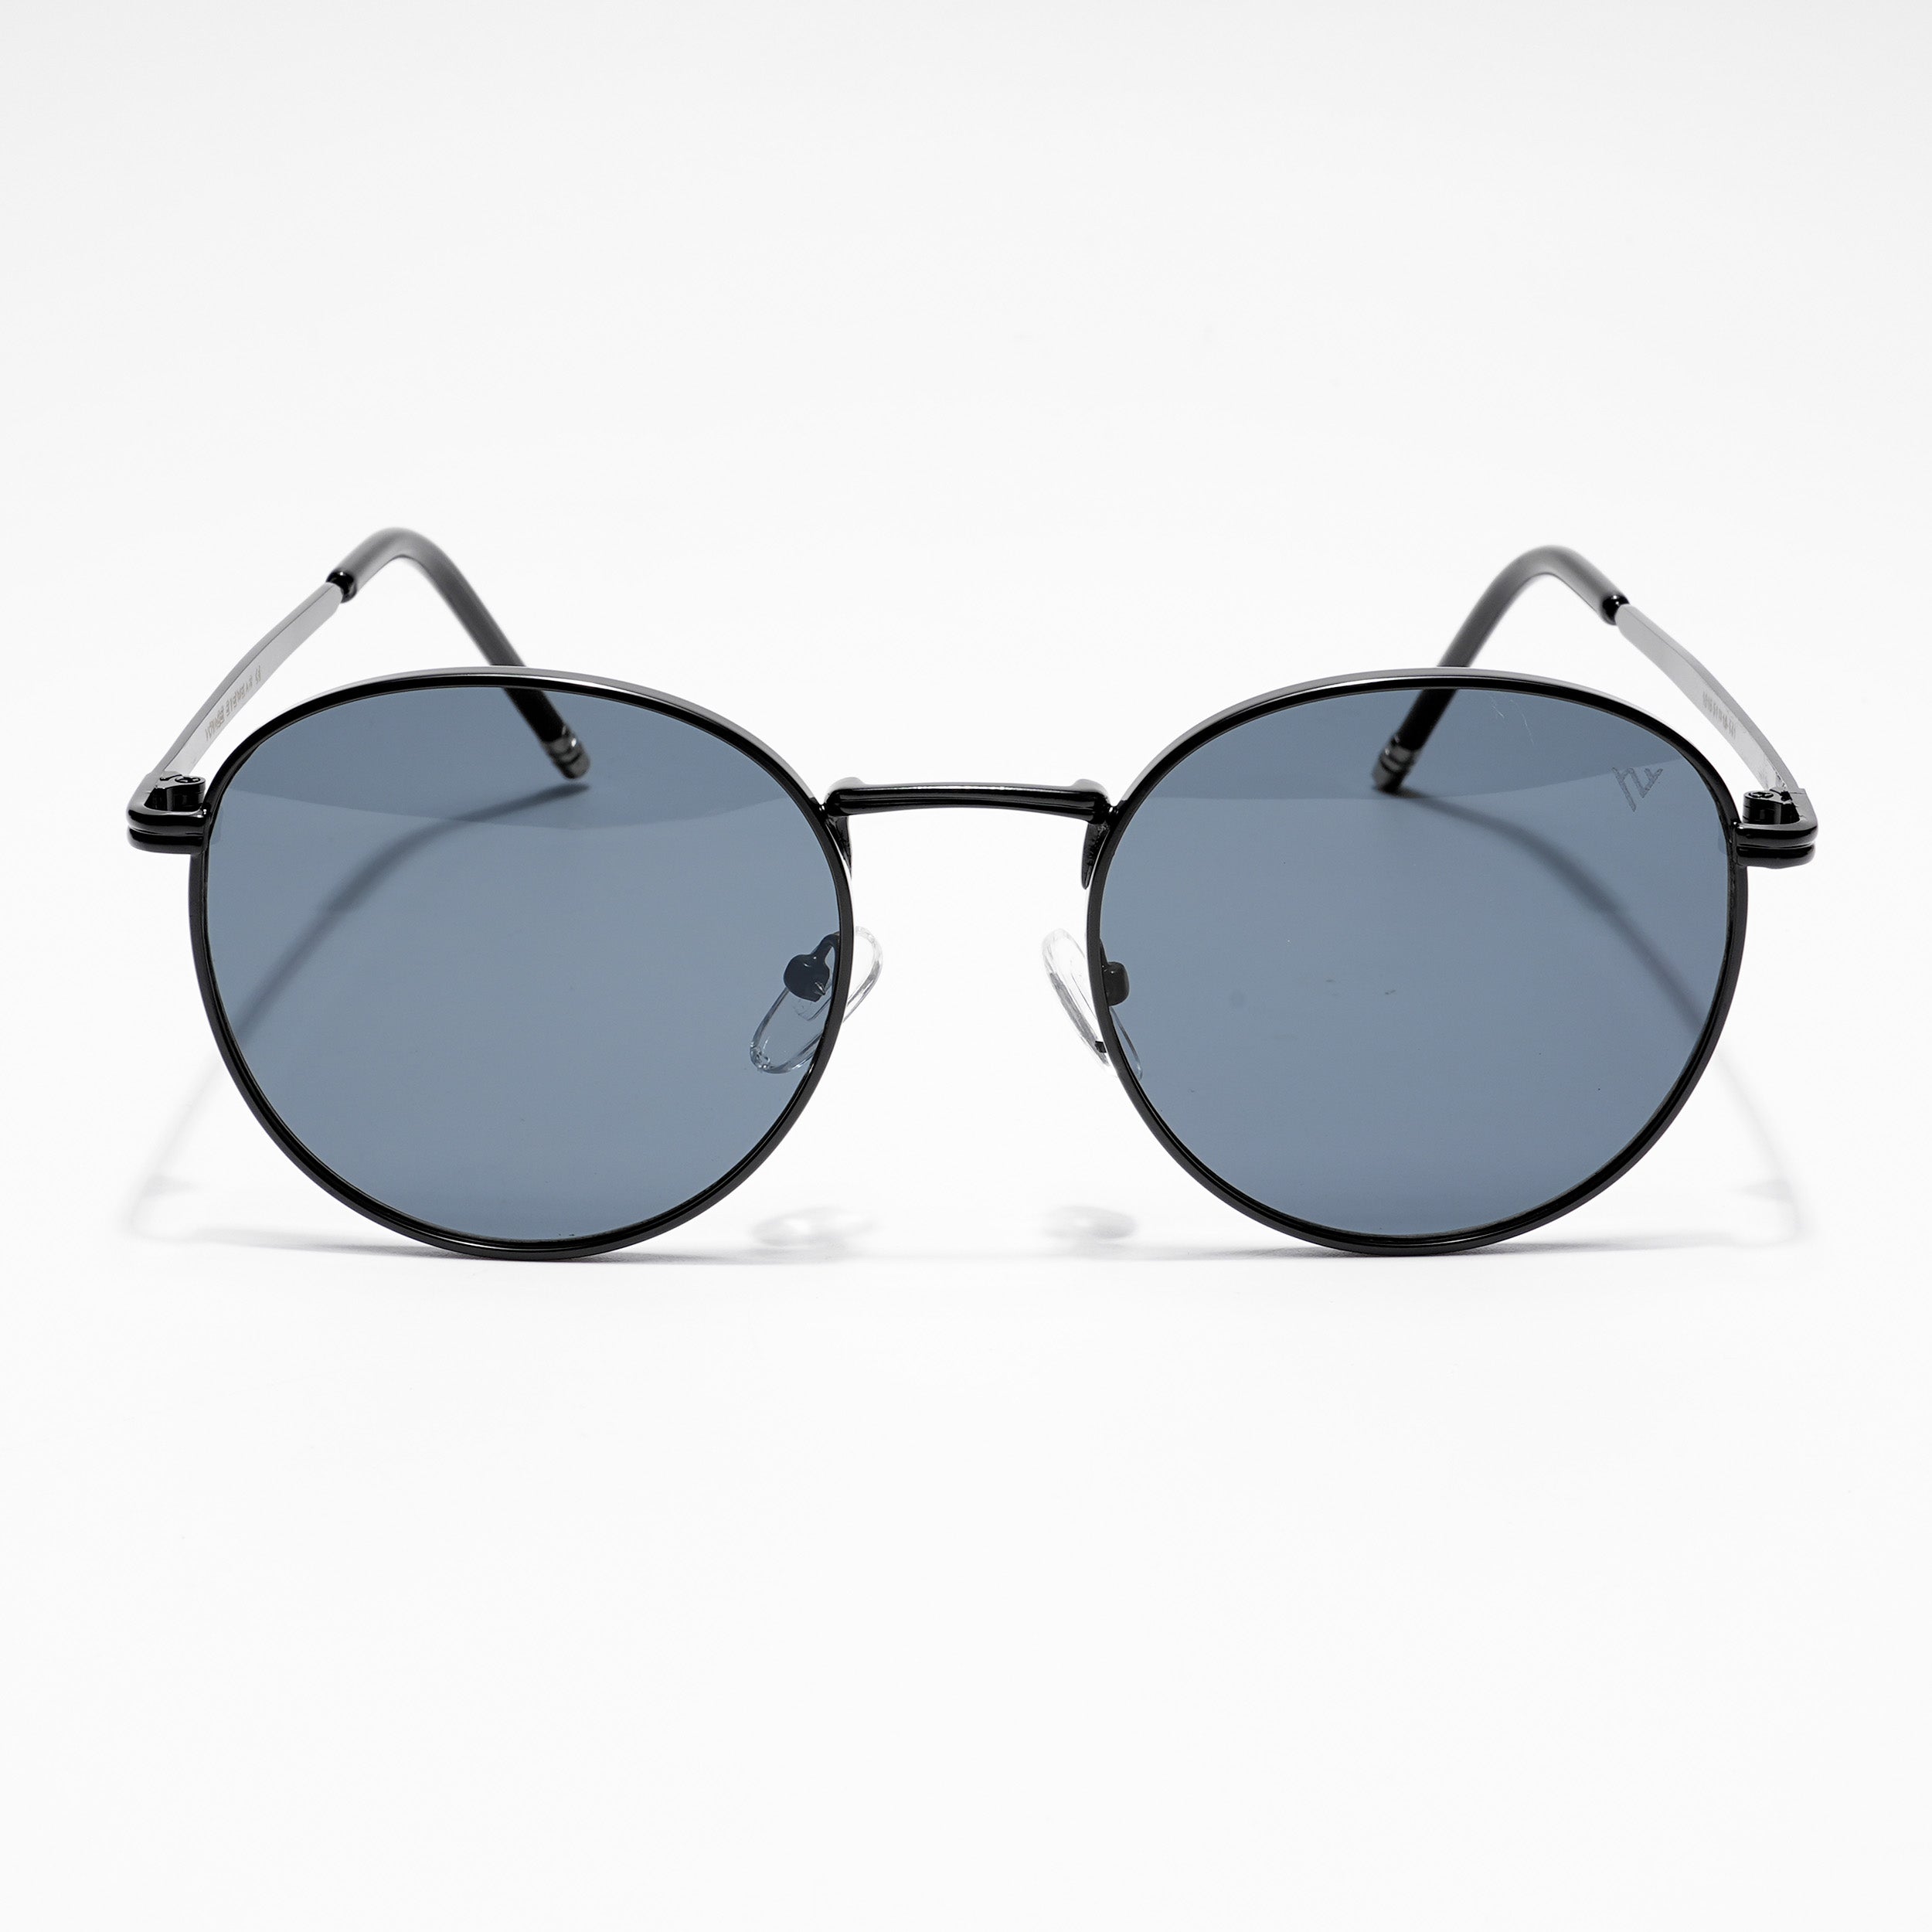 Voyage Premium Round Black Sunglasses MG3625